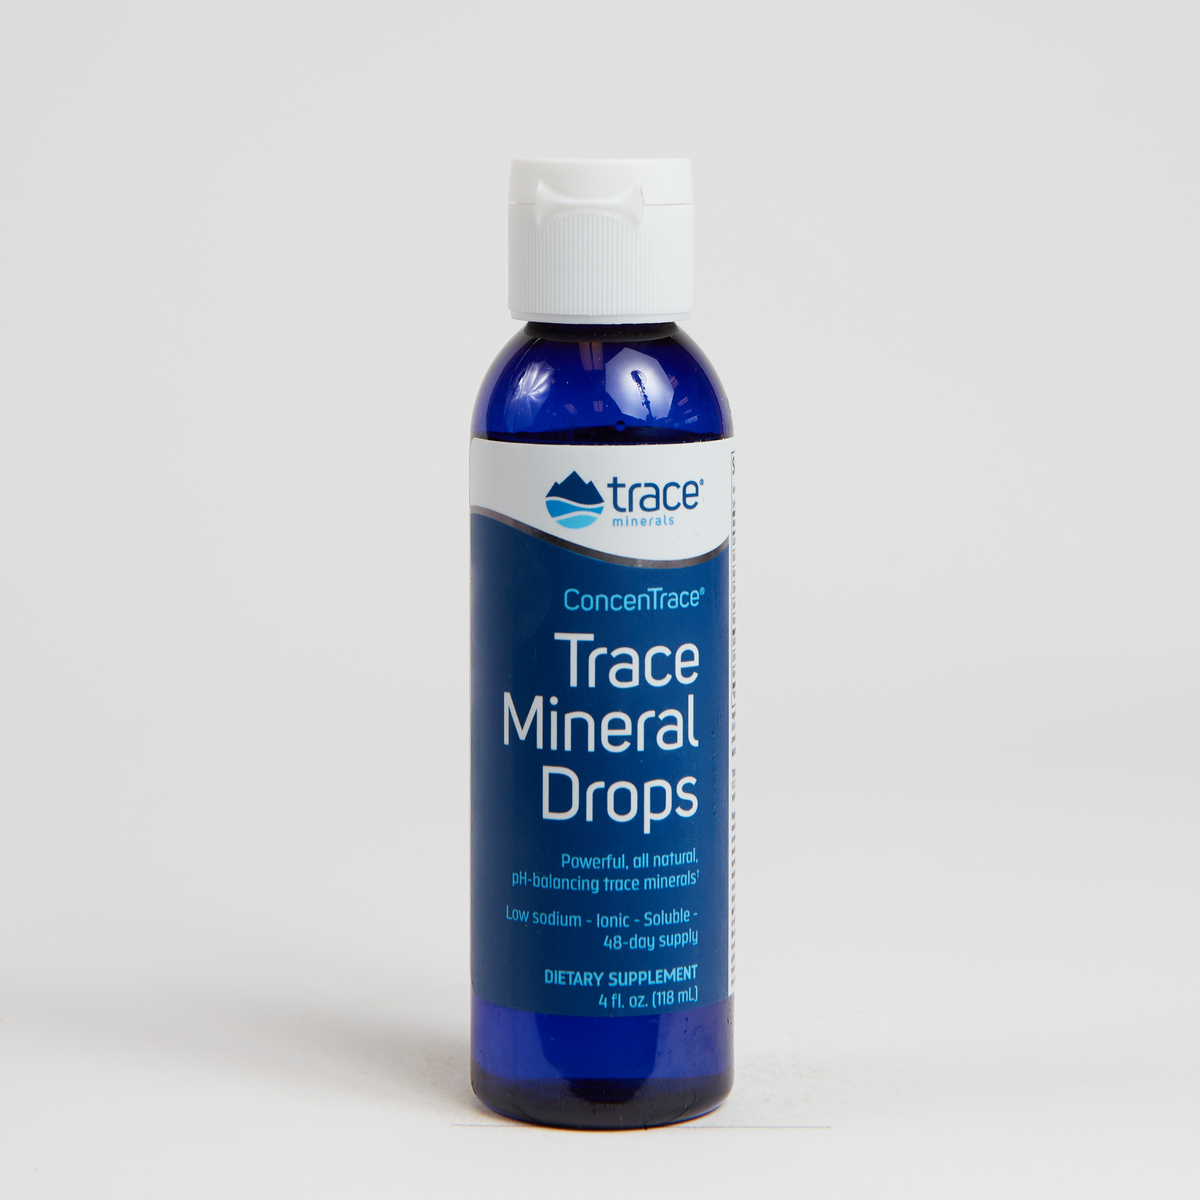 Trace Minerals Concentrace Trace  Mineral Drops - 4 Oz